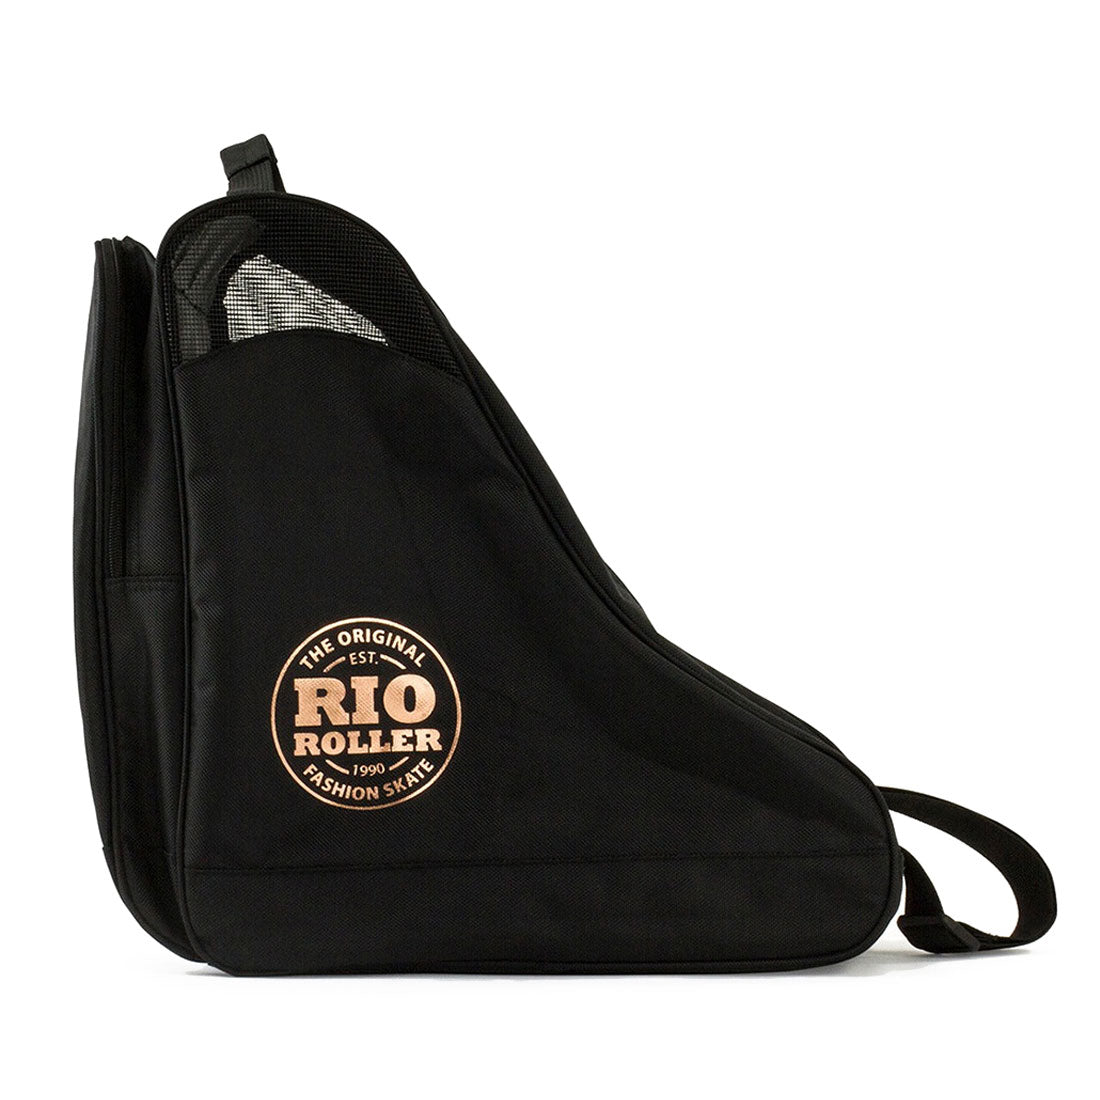 Rio Roller Skate Bag - Black/Rose Gold Bags and Backpacks